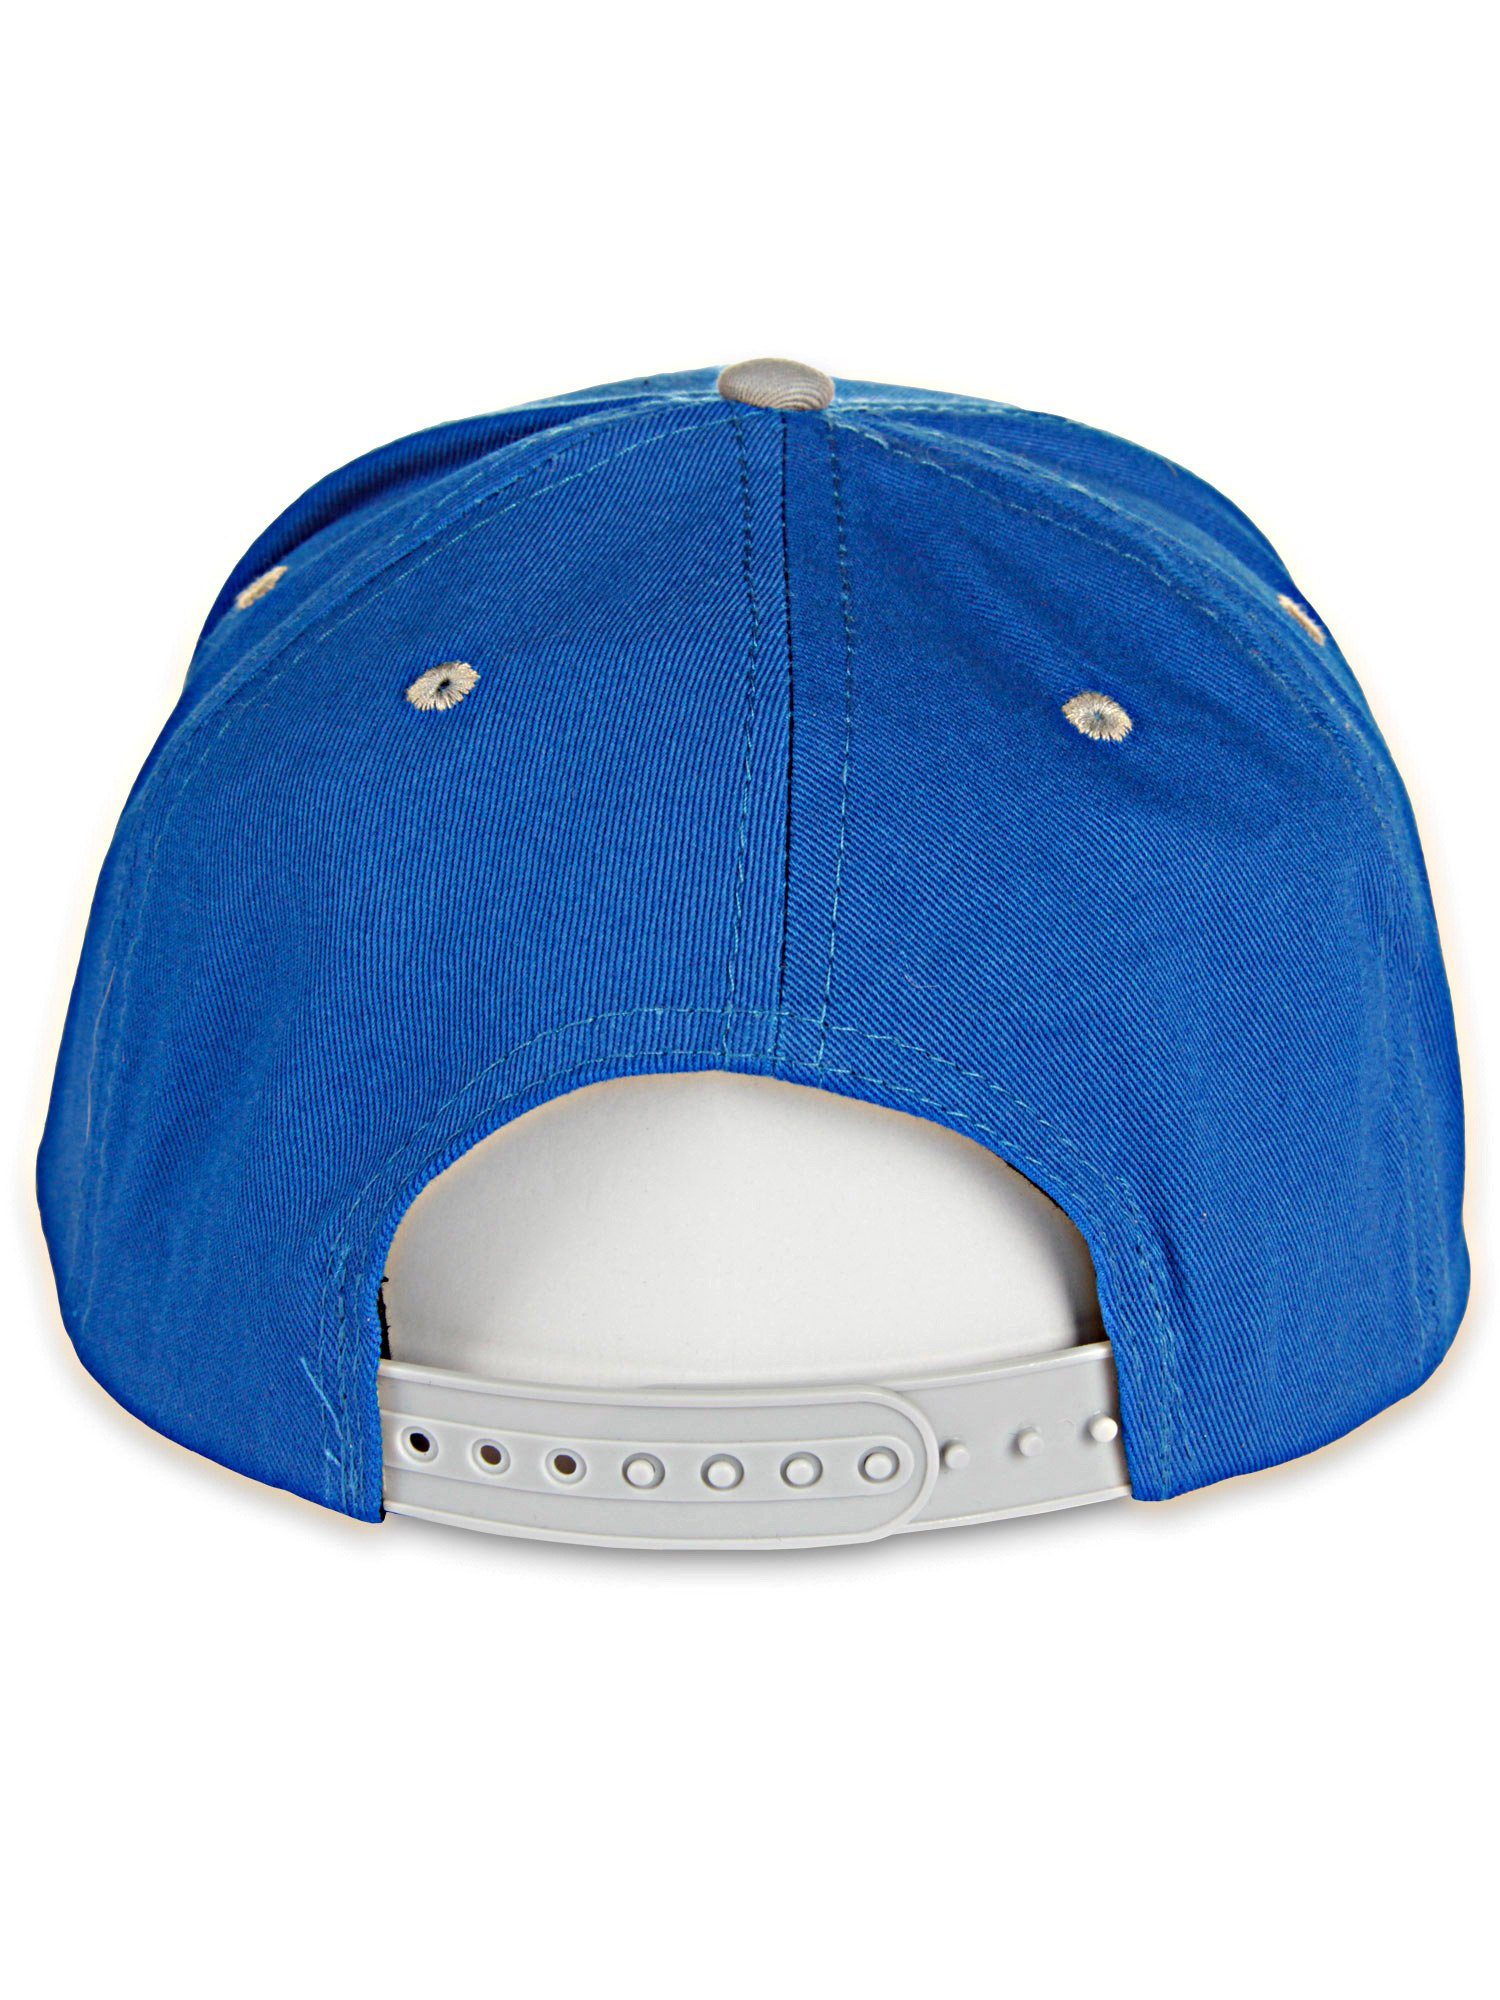 RedBridge Baseball Cap Smethwick mit kontrastfarbigem Schirm blau-grau